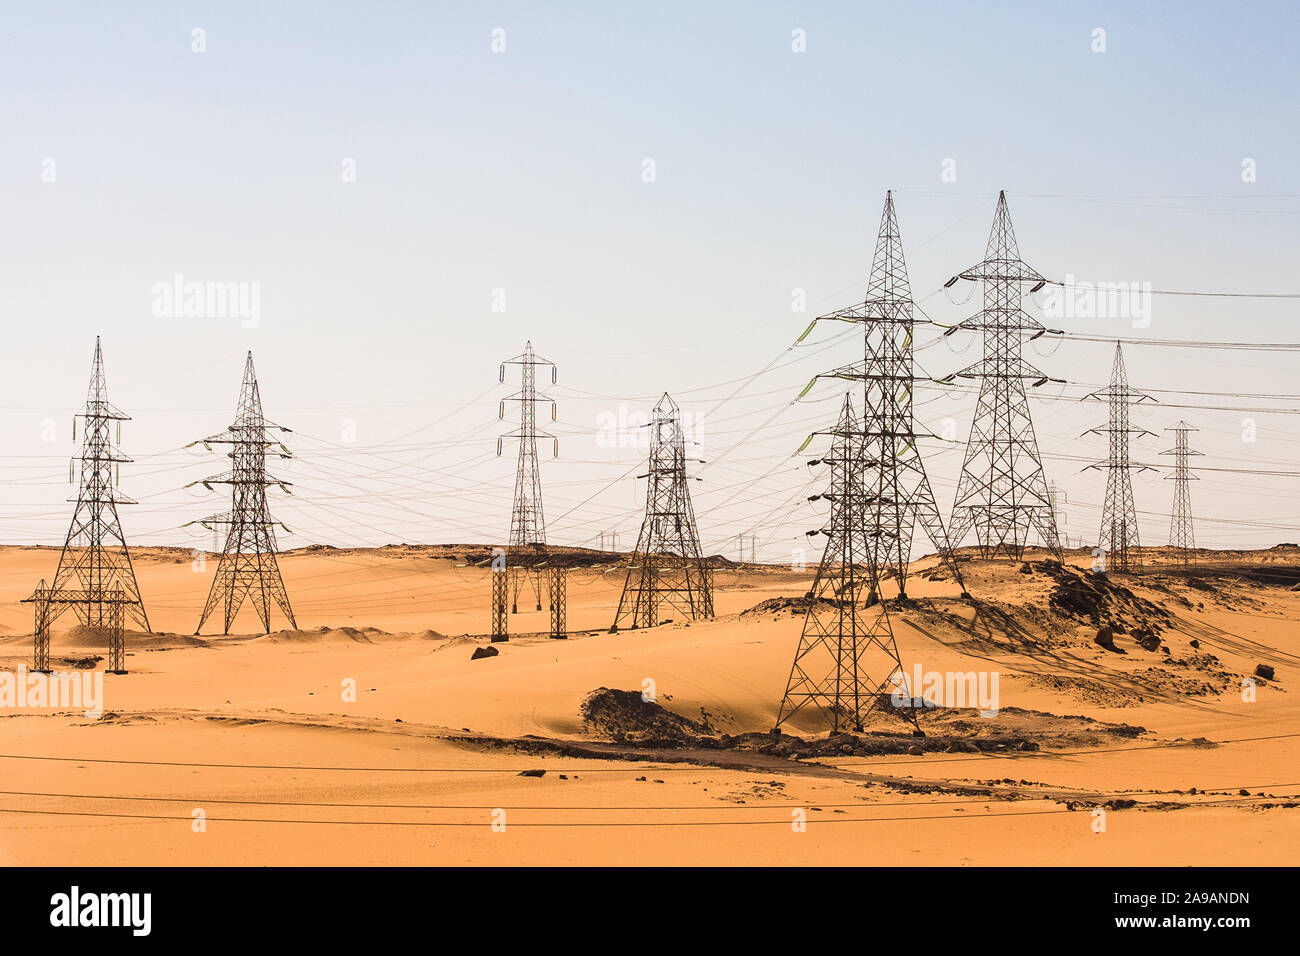 Aswan, Egypt, May 1, 2008: Overhead power lines in the desert near Aswan. Stock Photo